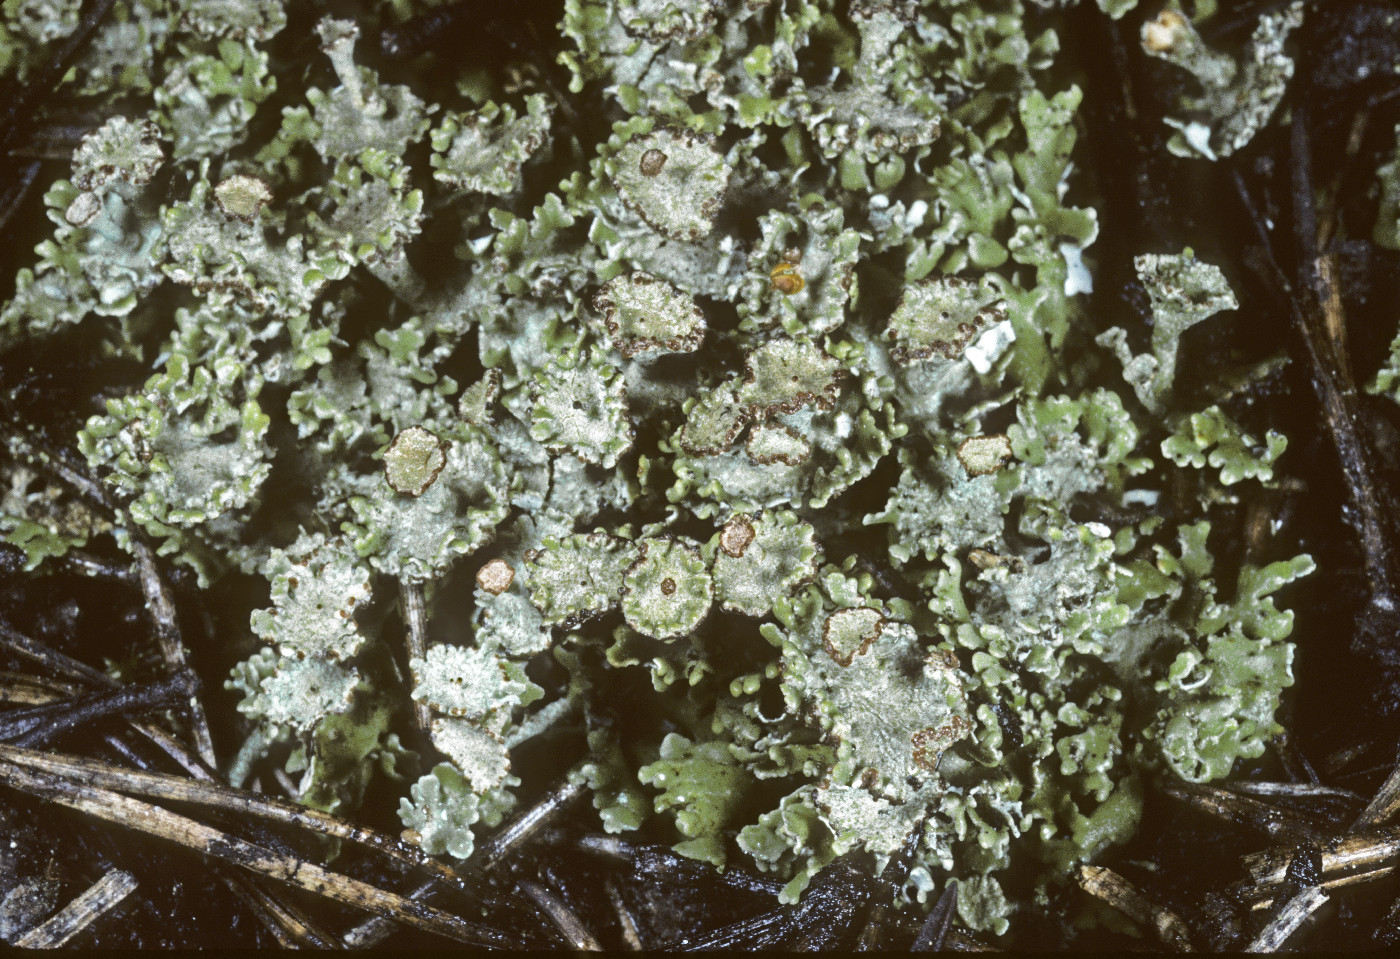 Cladonia macrophyllodes image